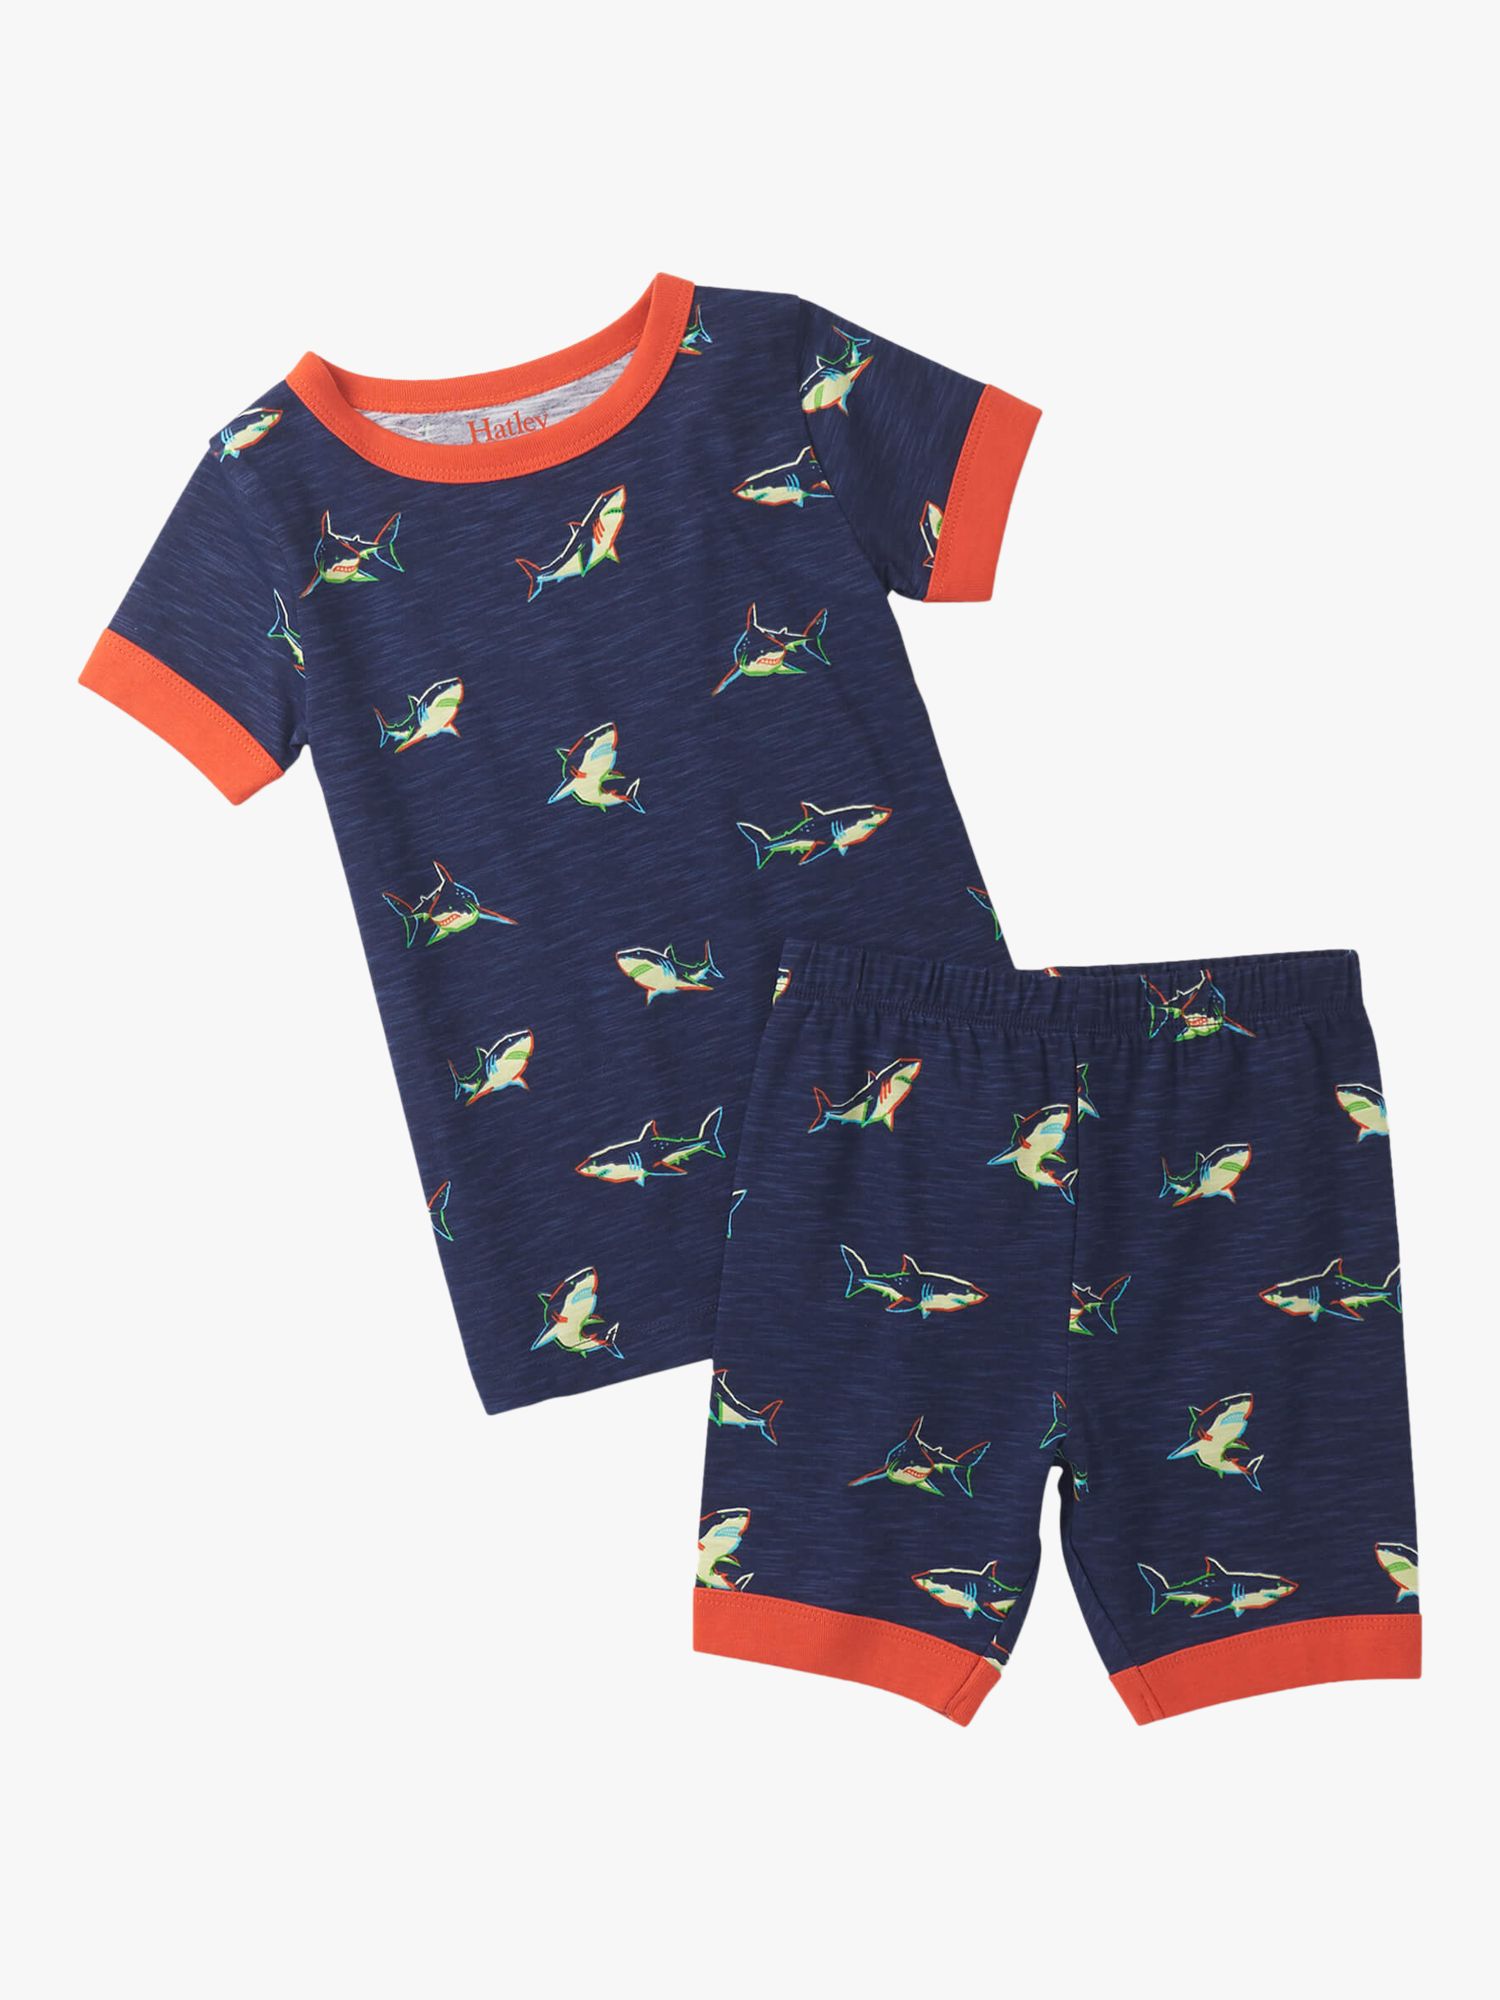 Buy Hatley Kids' Glow-In-The-Dark Shark Print Shorts Pyjamas, Patriot Blue Online at johnlewis.com